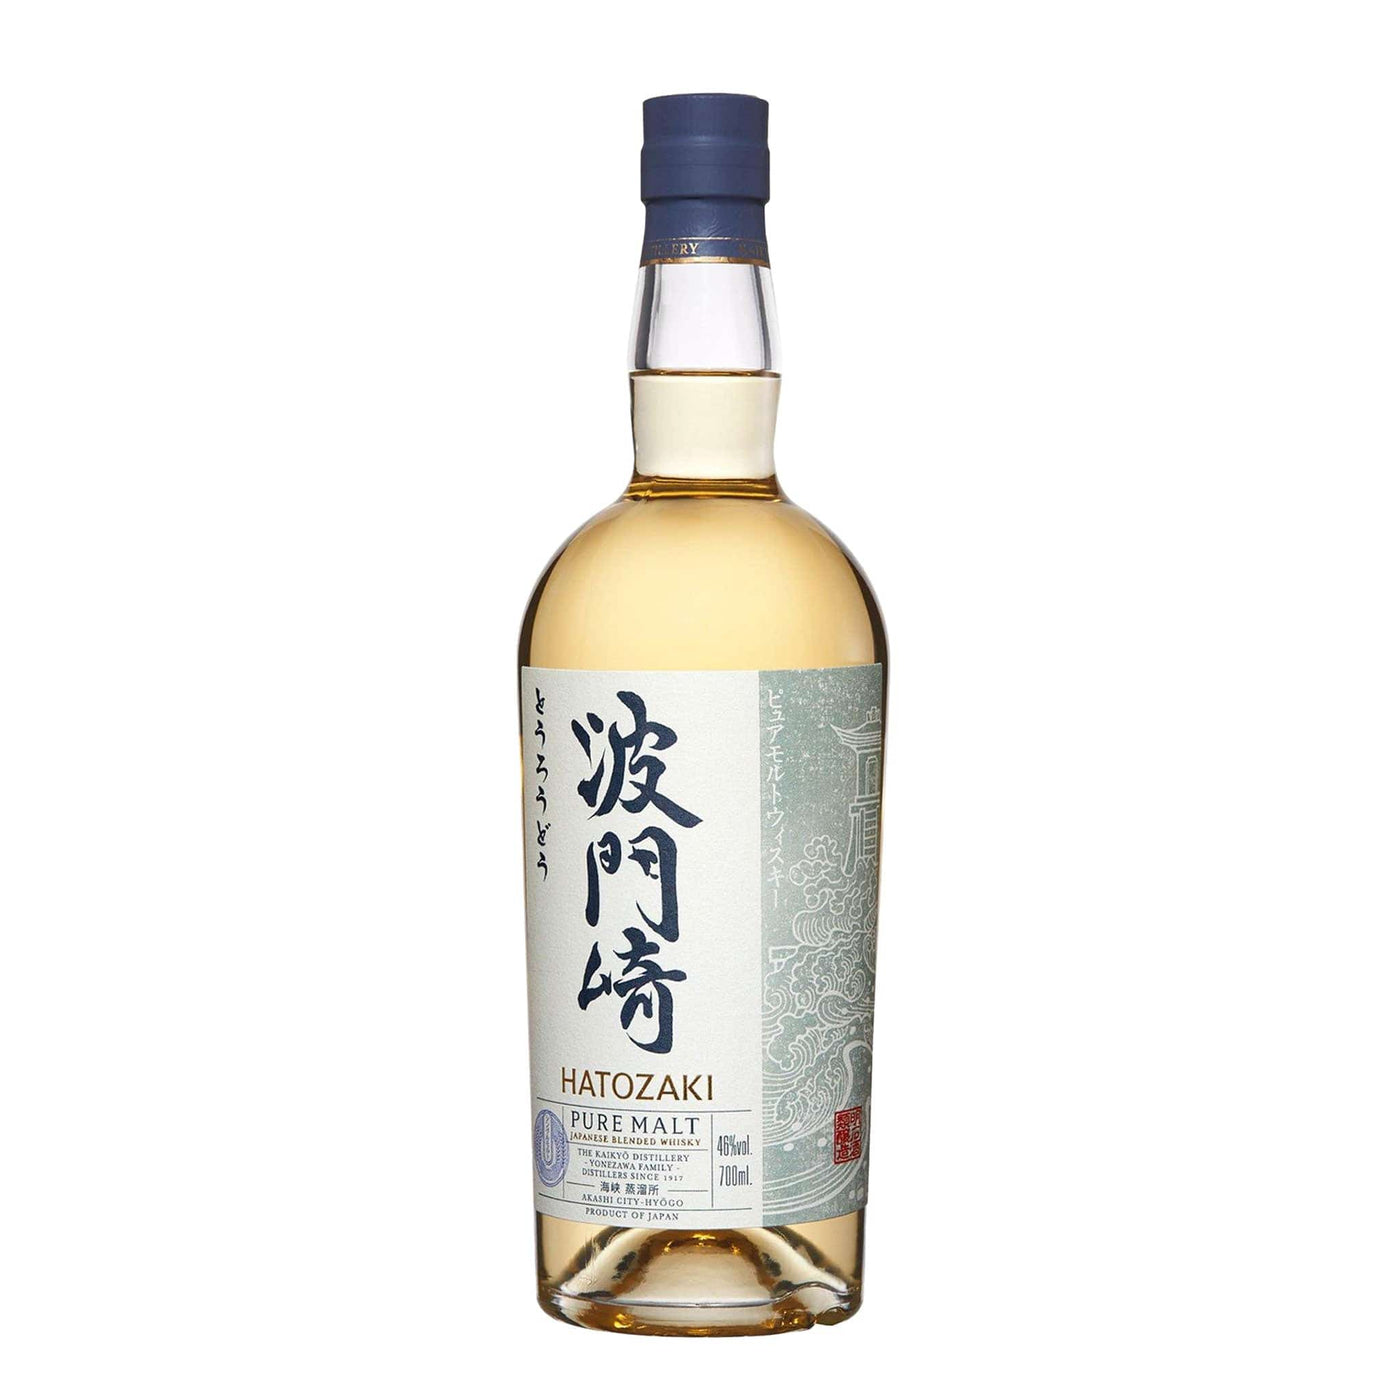 Hatozaki Pure Malt Whisky - Spiritly